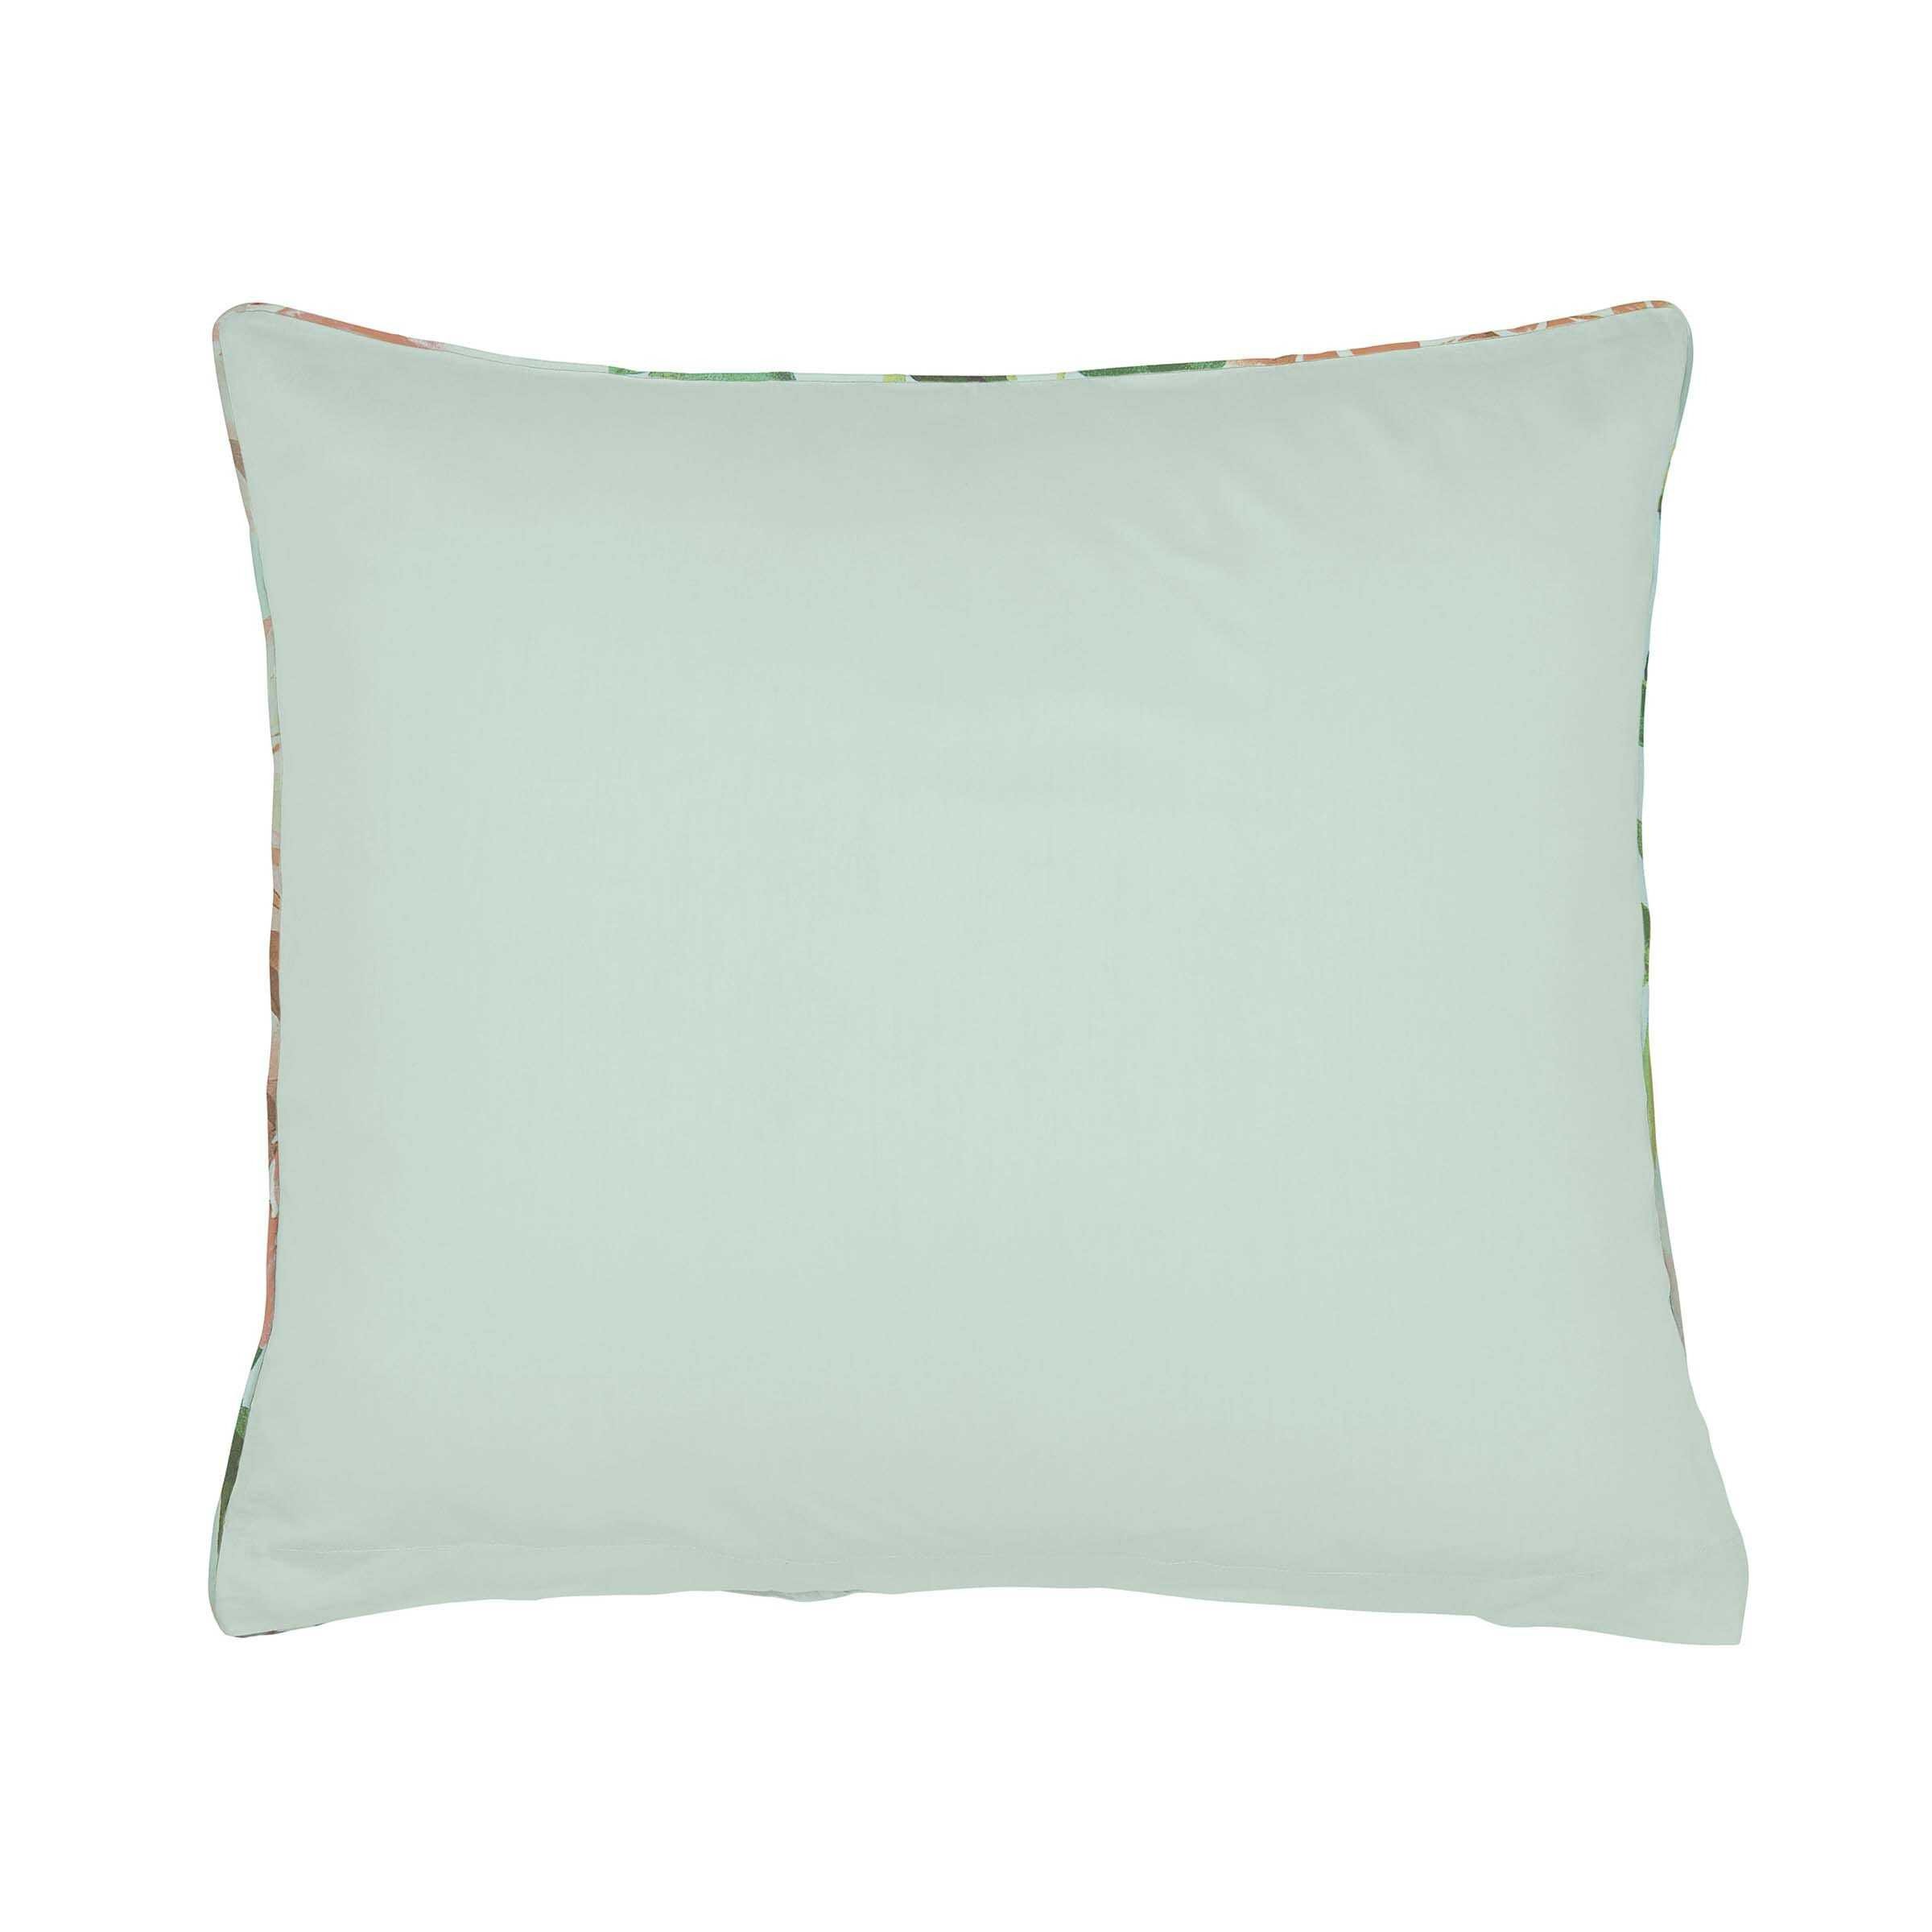 Harlequin Dahlia Pair of Square Pillowcases, Coral - image 1